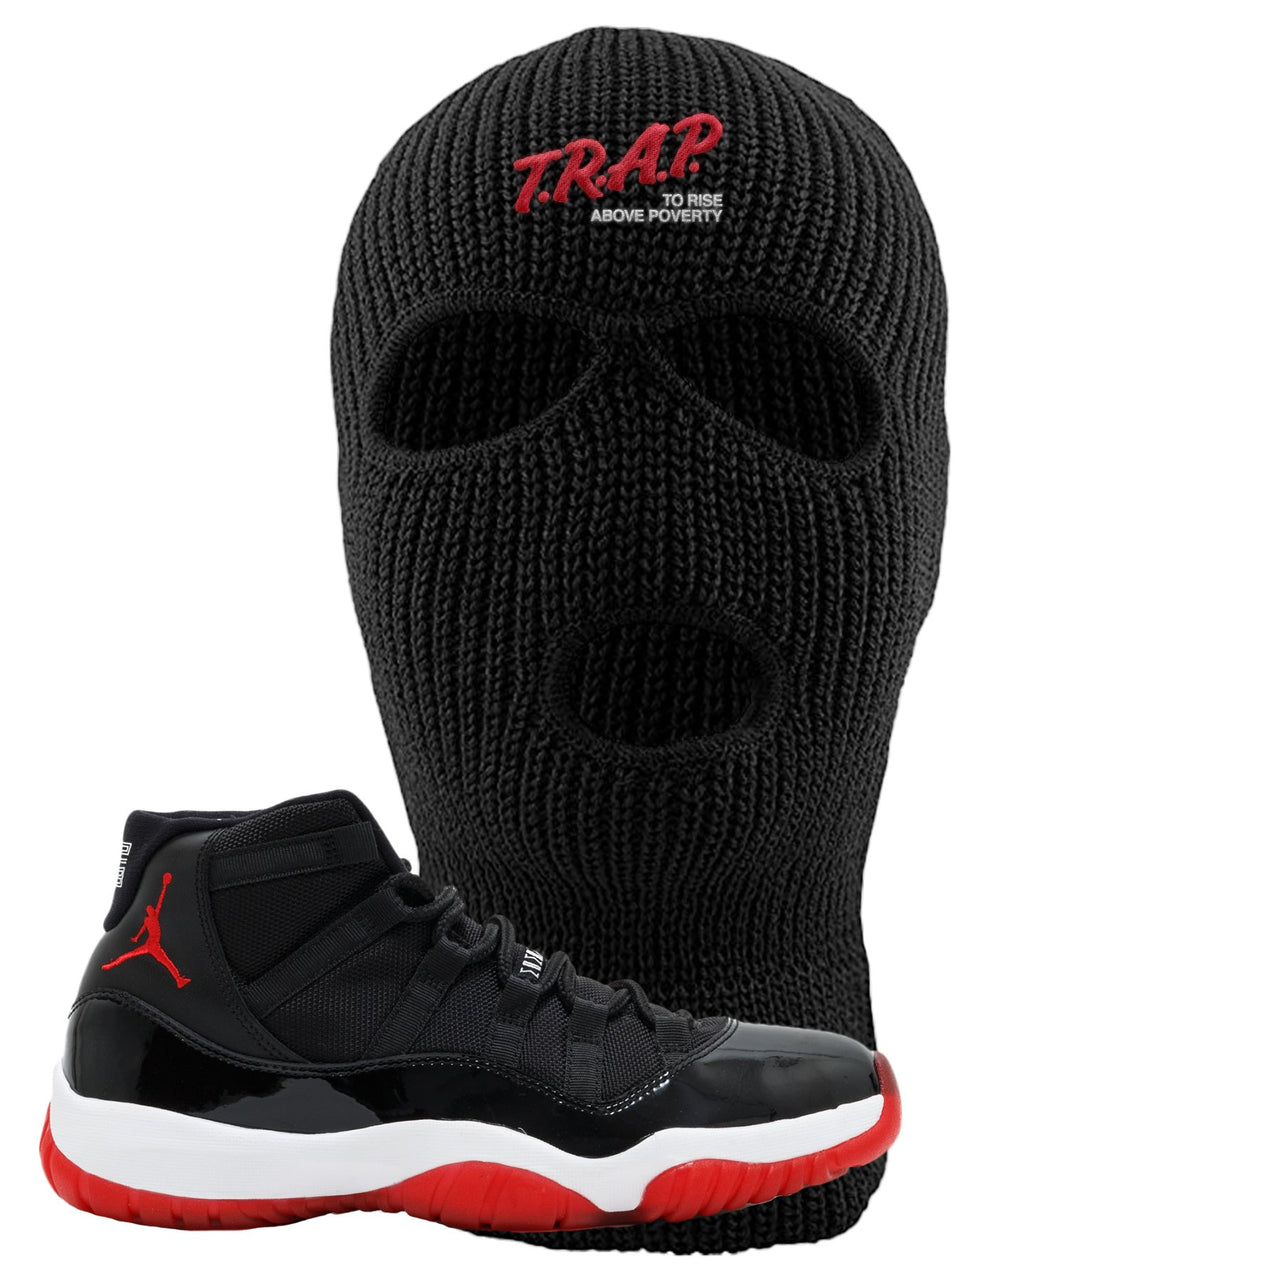 Jordan 11 Bred Trap To Rise Above Poverty Black Sneaker Hook Up Ski Mask